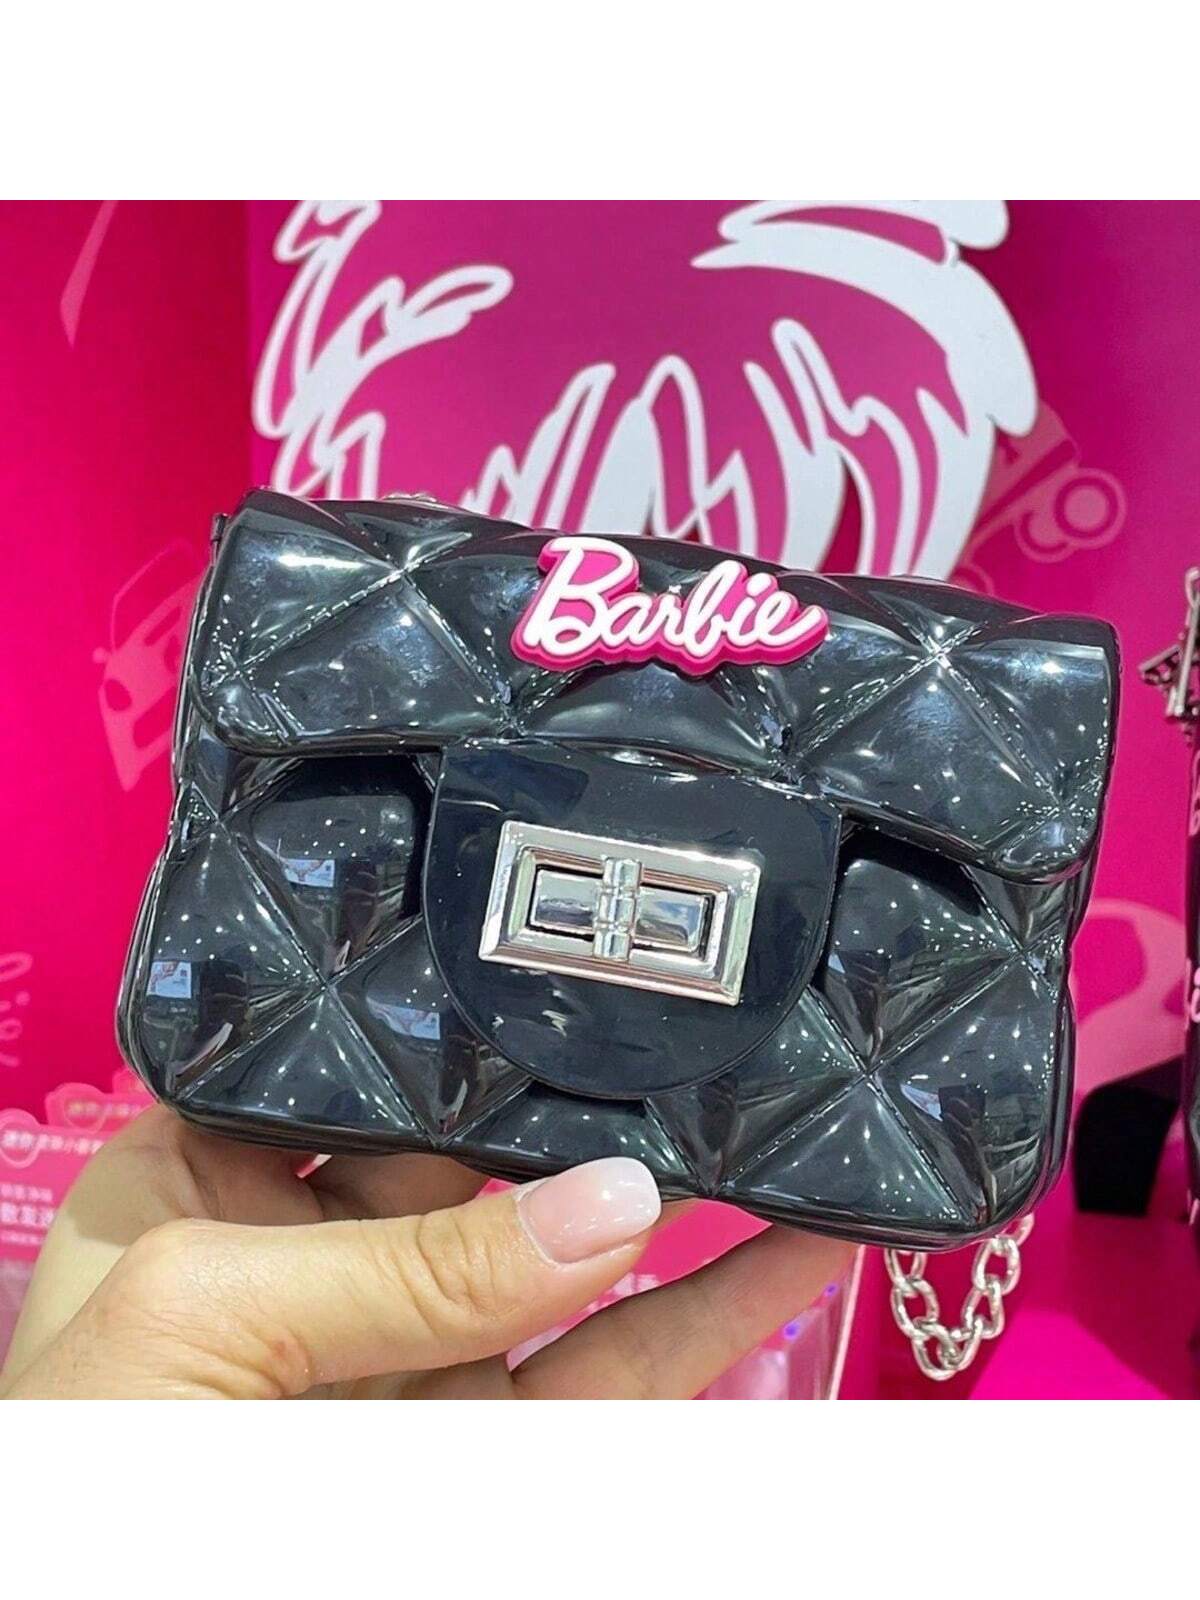 Miniso Barbie Series, черный printio сумка барби